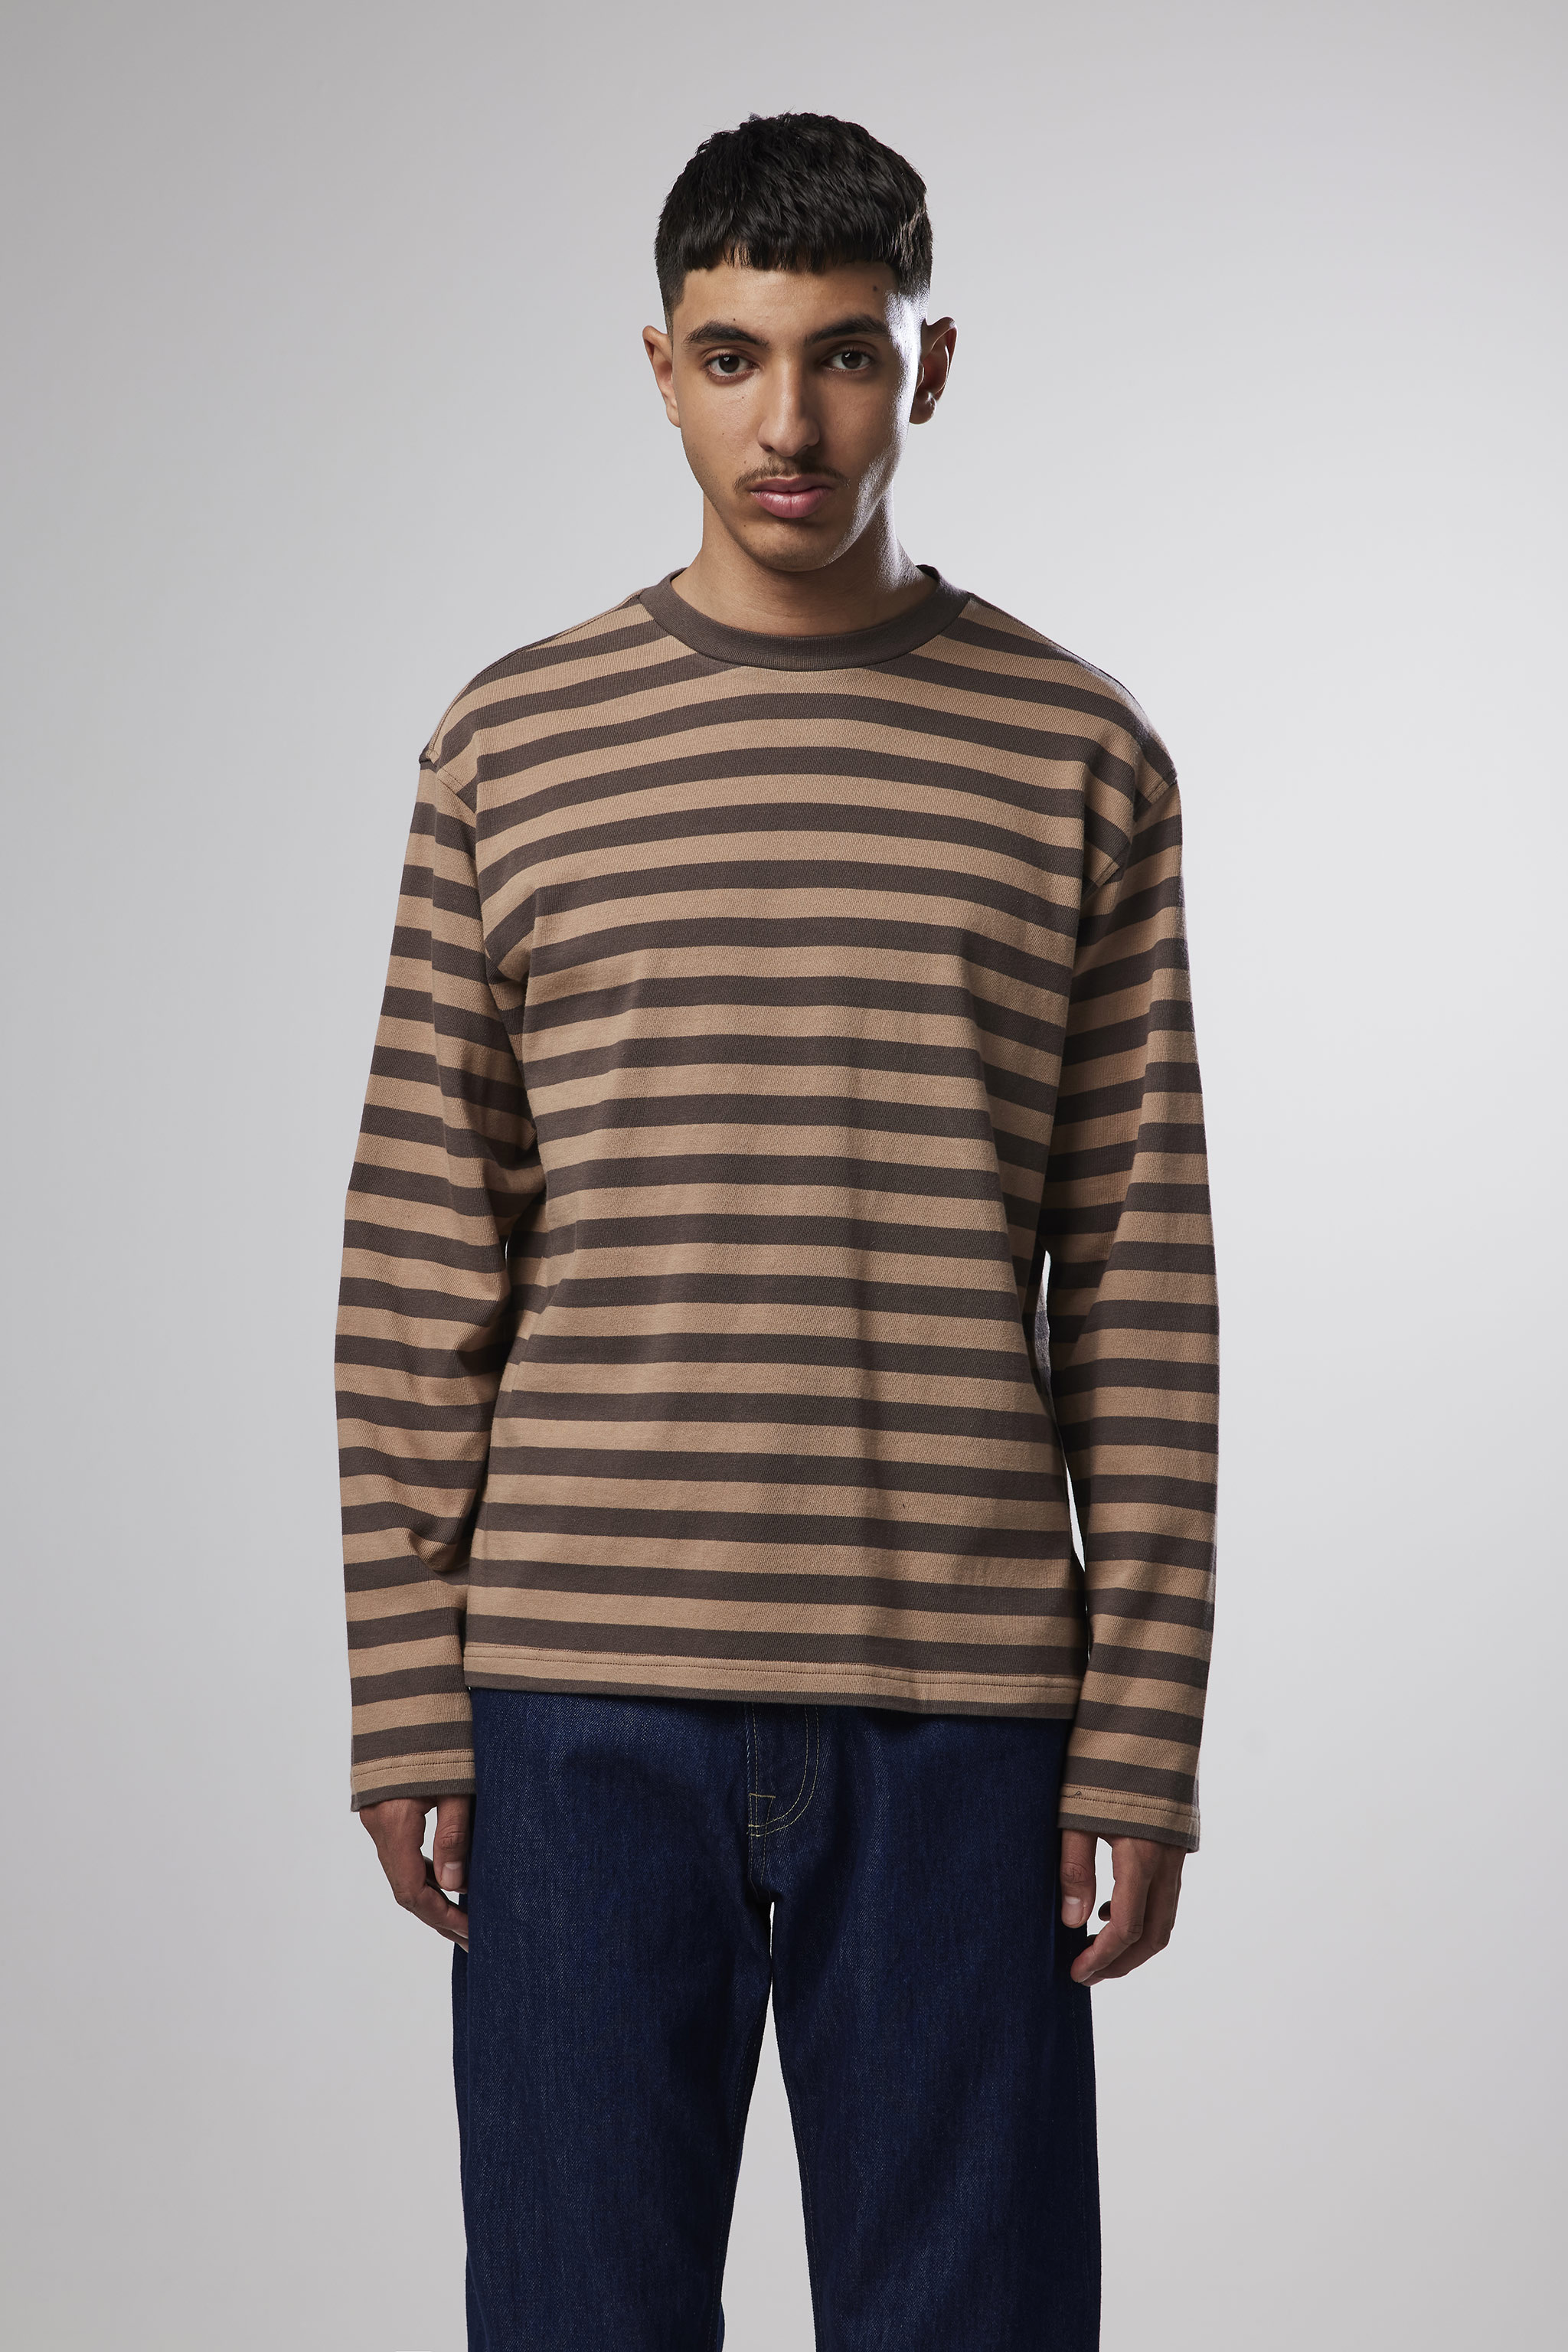 Tim 3449 men's sweatshirt - Blue Stripe - Buy online at NN.07®